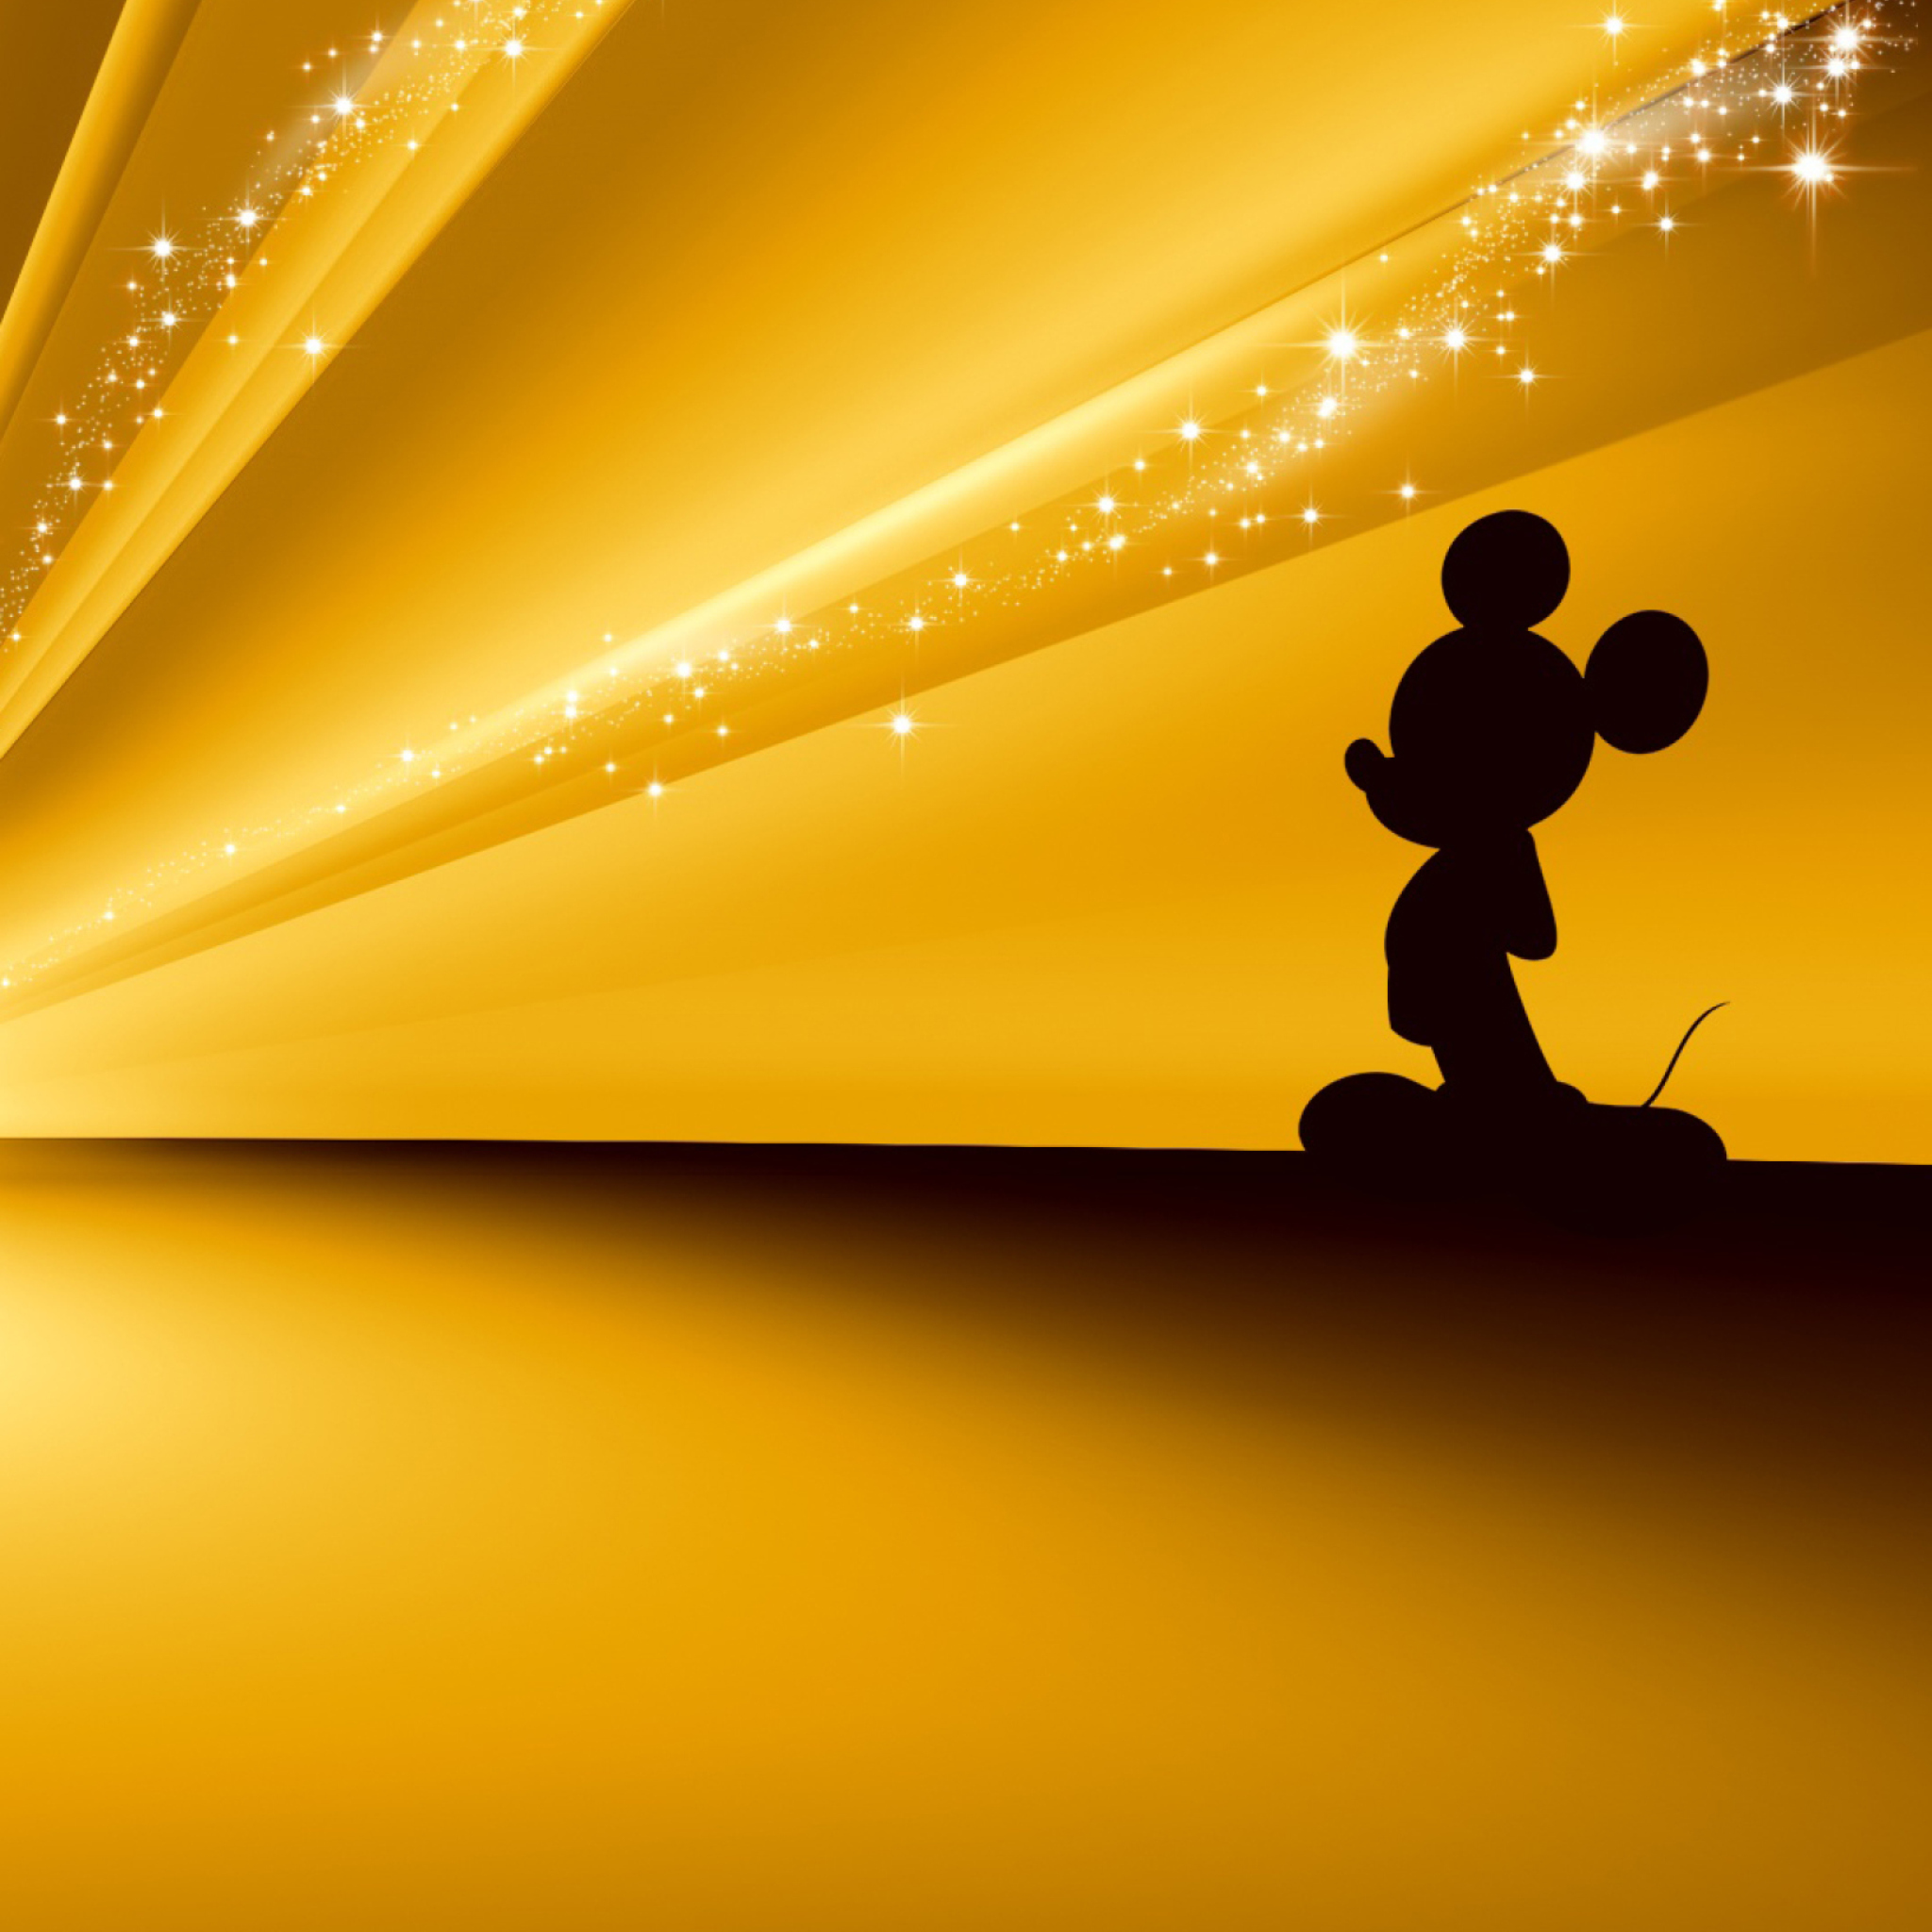 Mickey Mouse Disney Gold Wallpaper Fondos De Pantalla Gratis Para Ipad Air